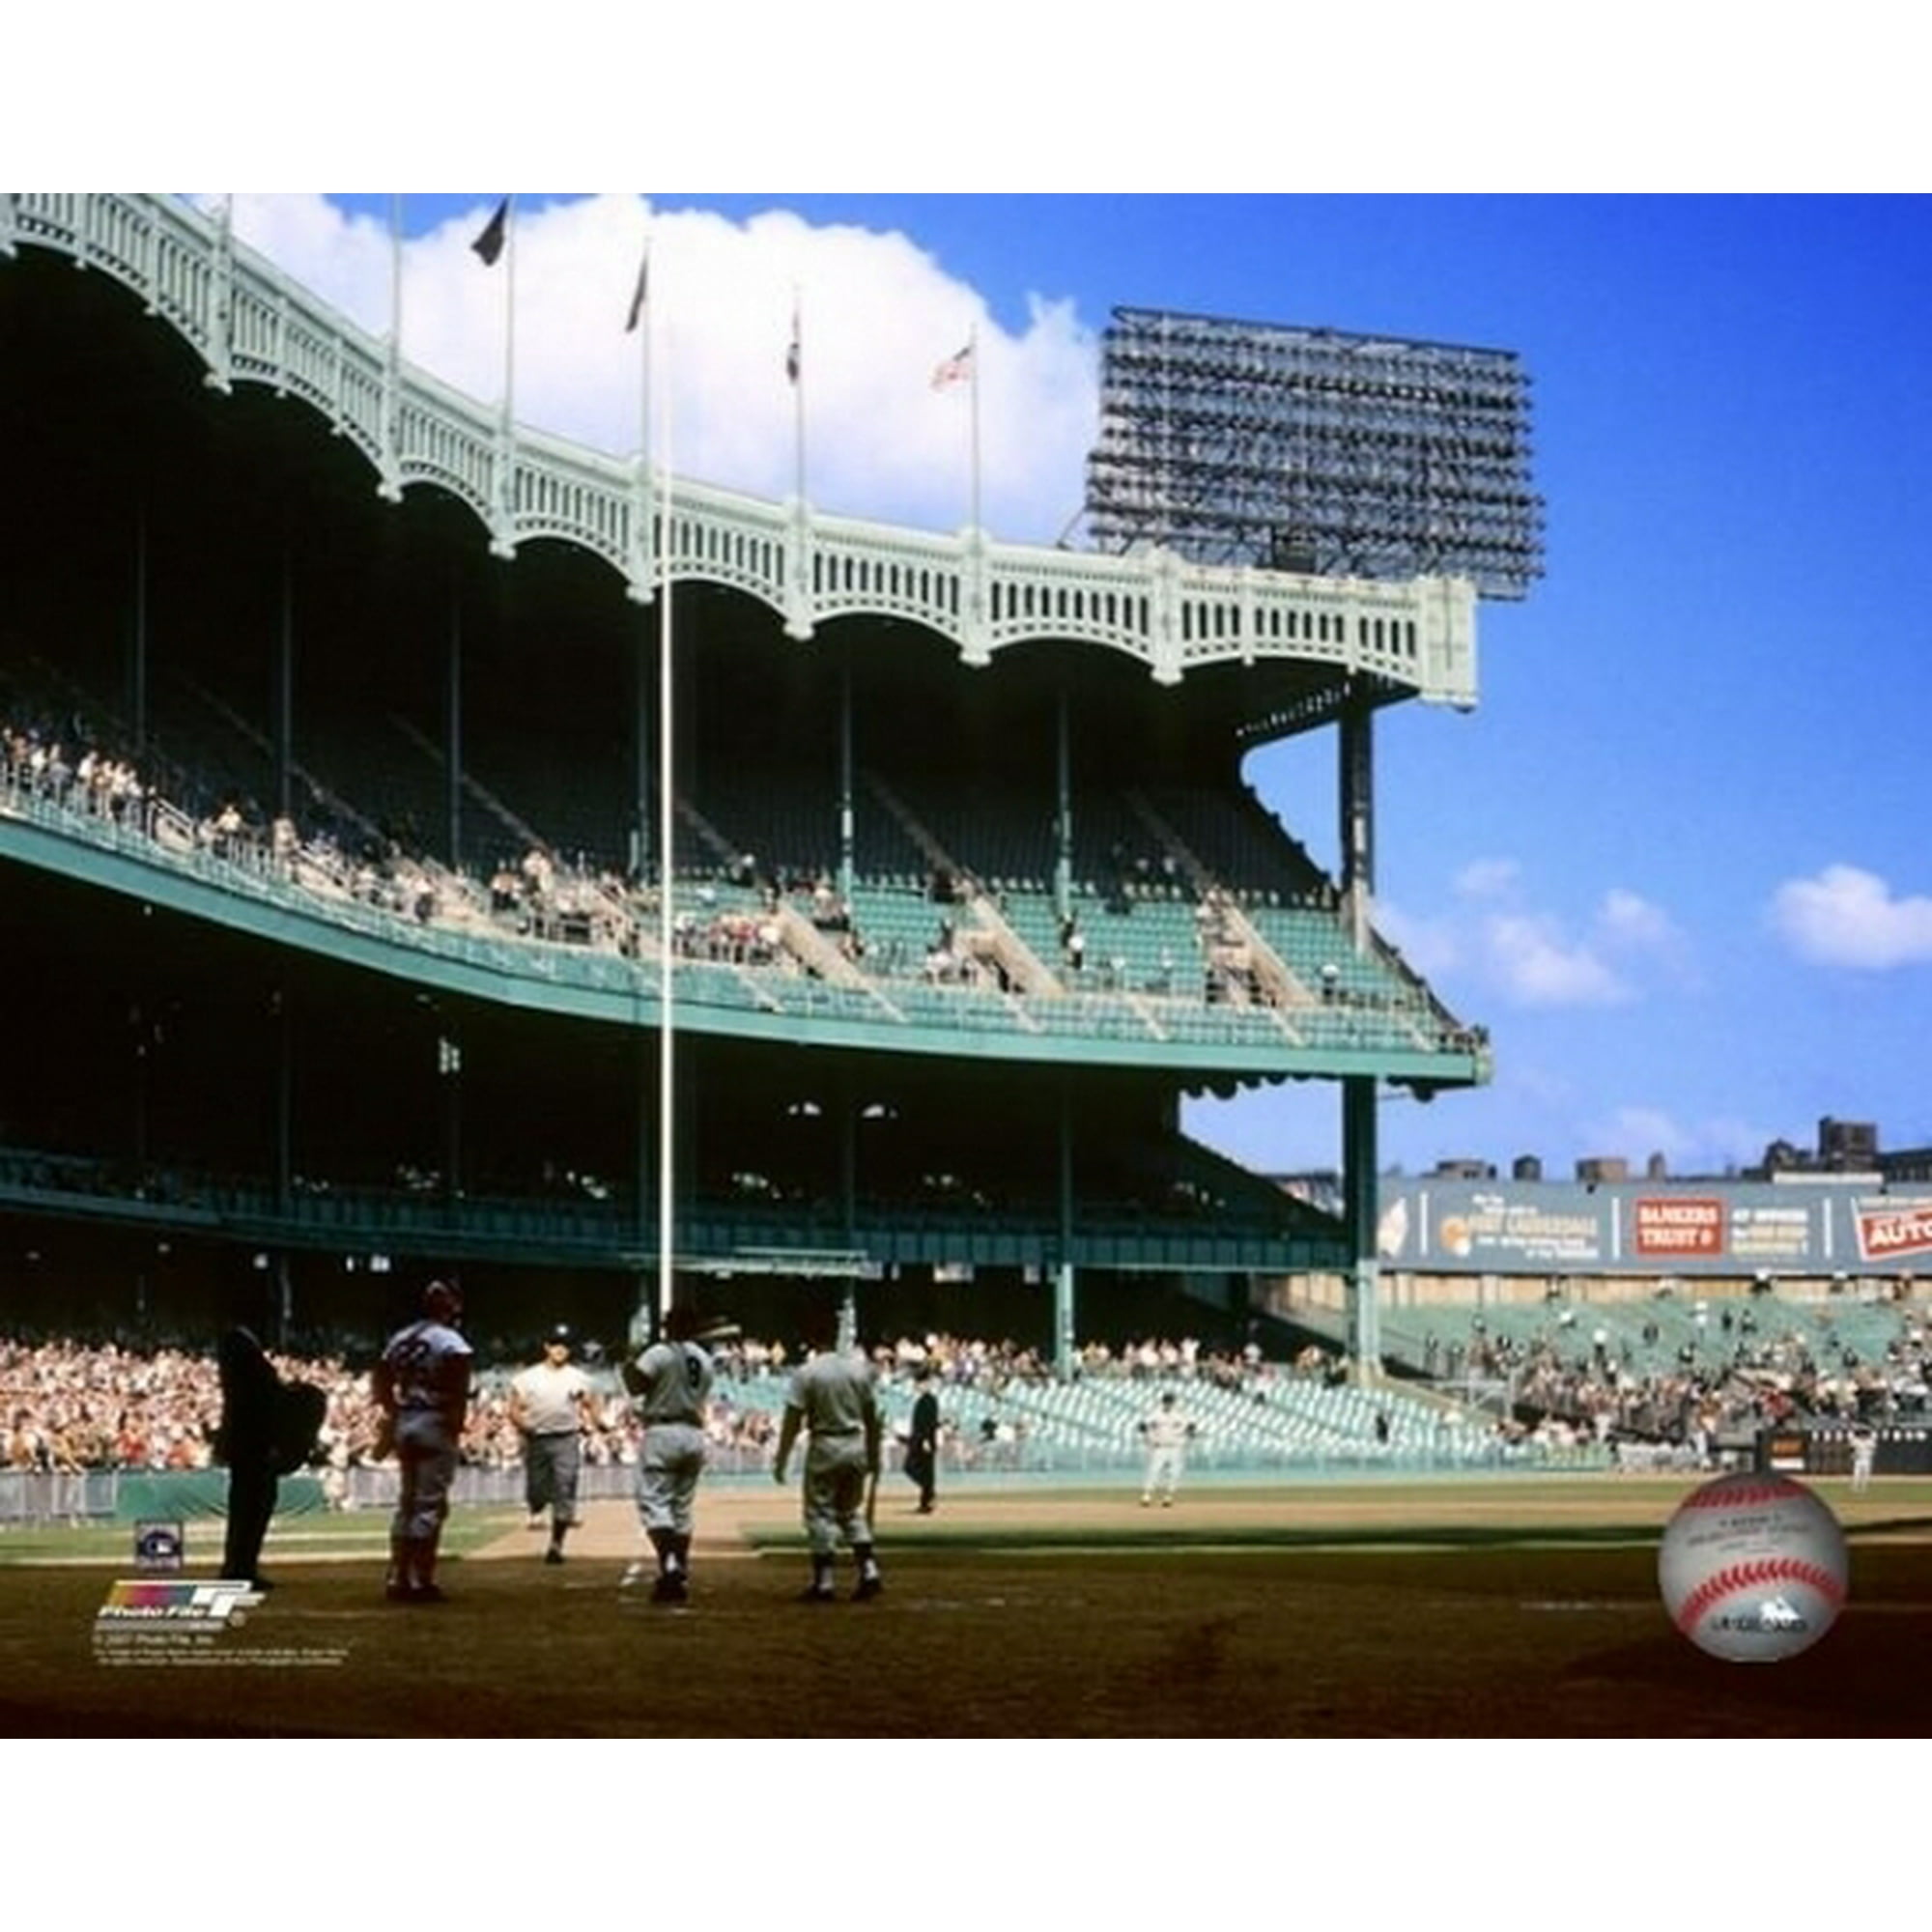 Yankee Stadium Roger Maris 61st Home Run 1961 Photo Print - Item #  VARPFSAAIA161 